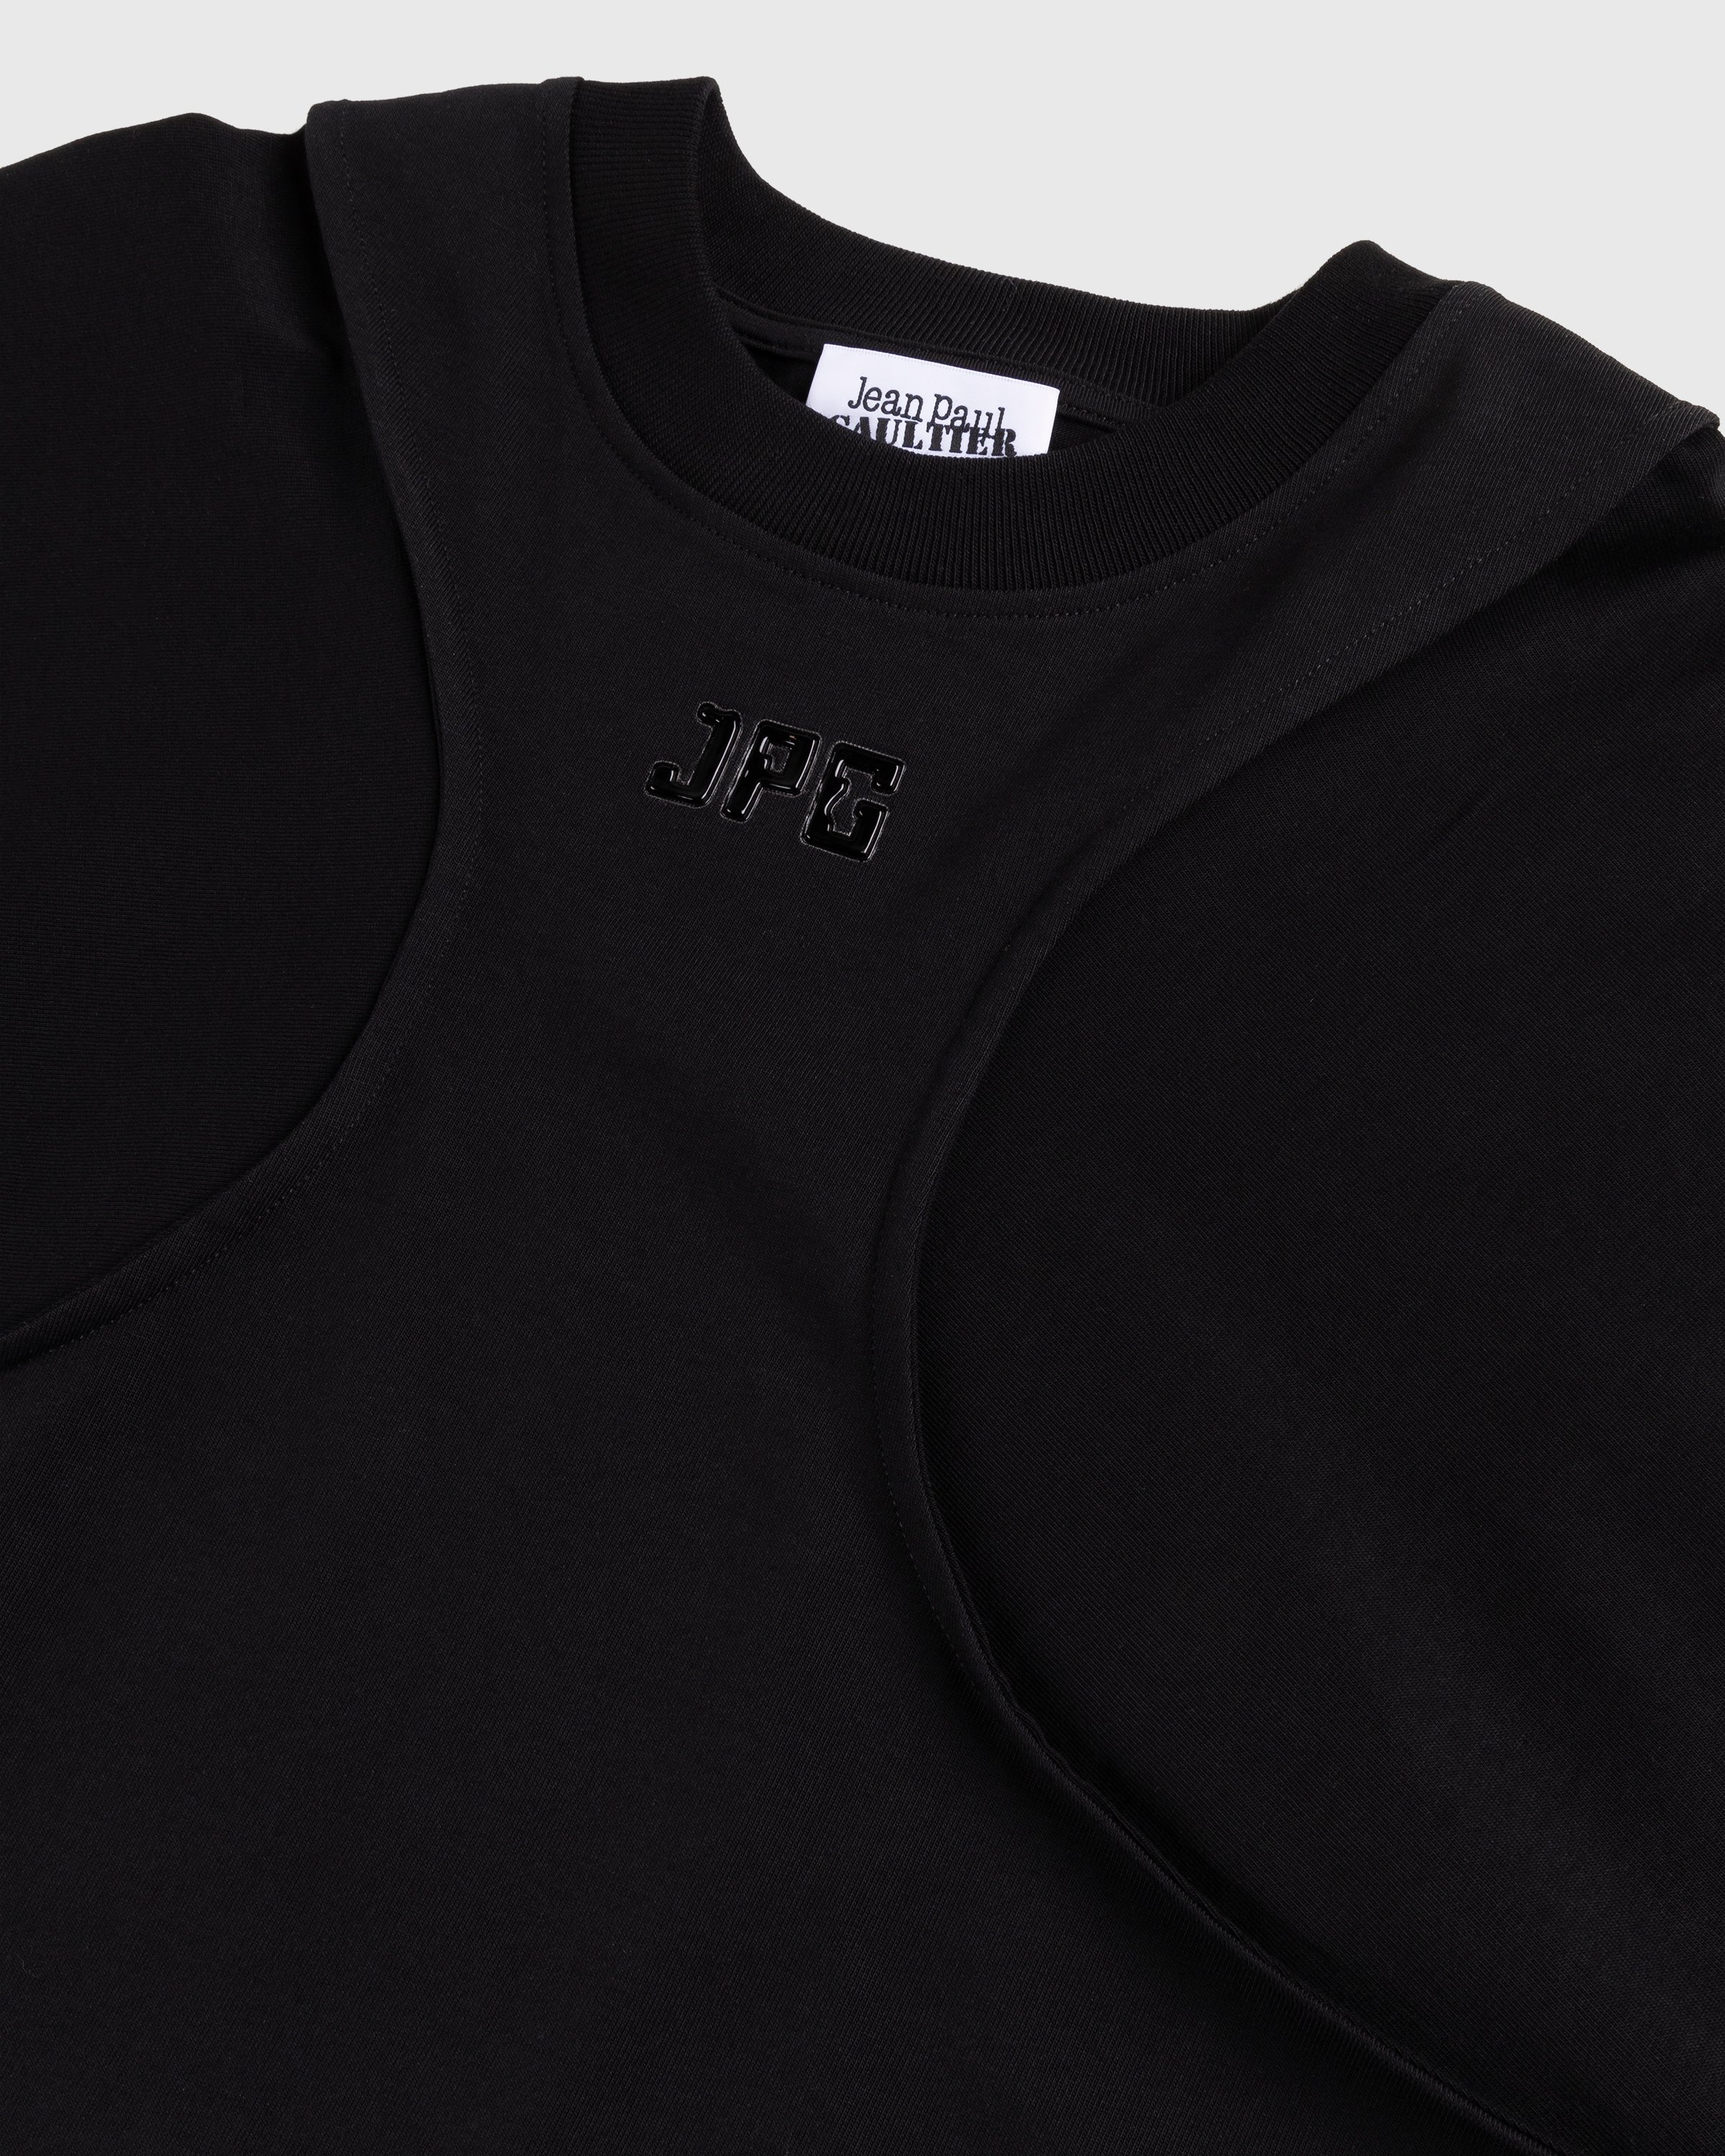 Jean Paul Gaultier - JPG T-Shirt Black - Clothing - Black - Image 3